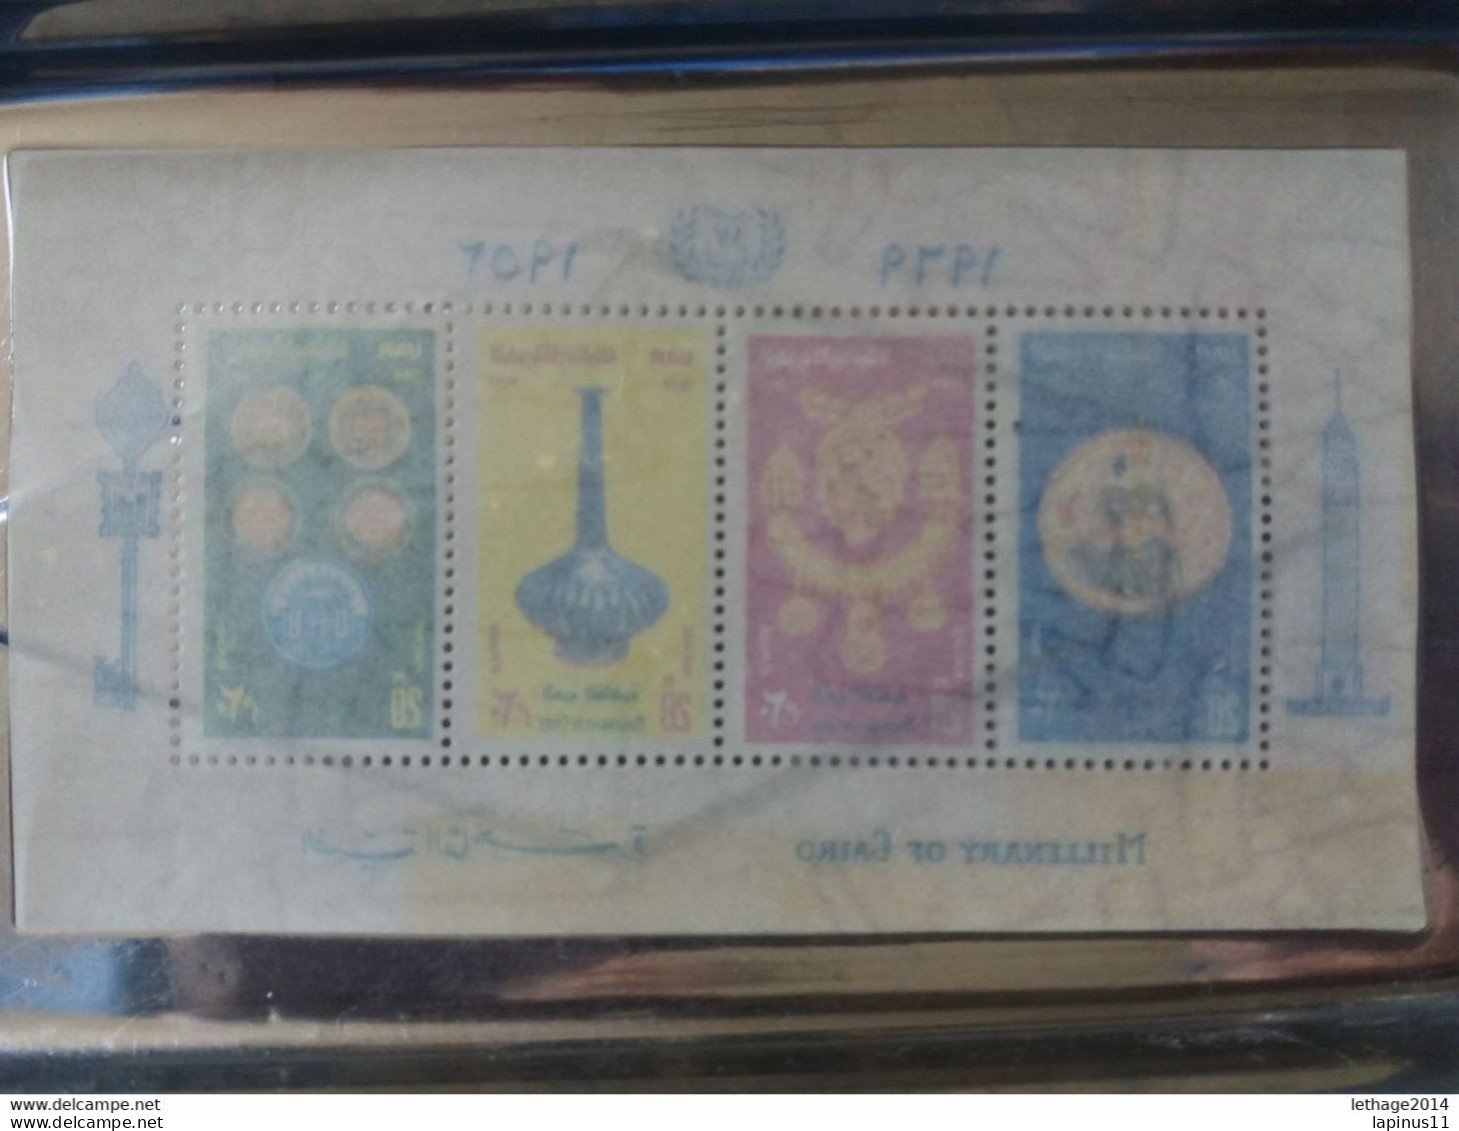 EGITIENNE مصر EGITTO UAR EGYPT 1969 JEWELS VASE COIN MNH MINIATURE SOUVENIR STAMP SHEET ERROR WMK REVERSED - Unused Stamps